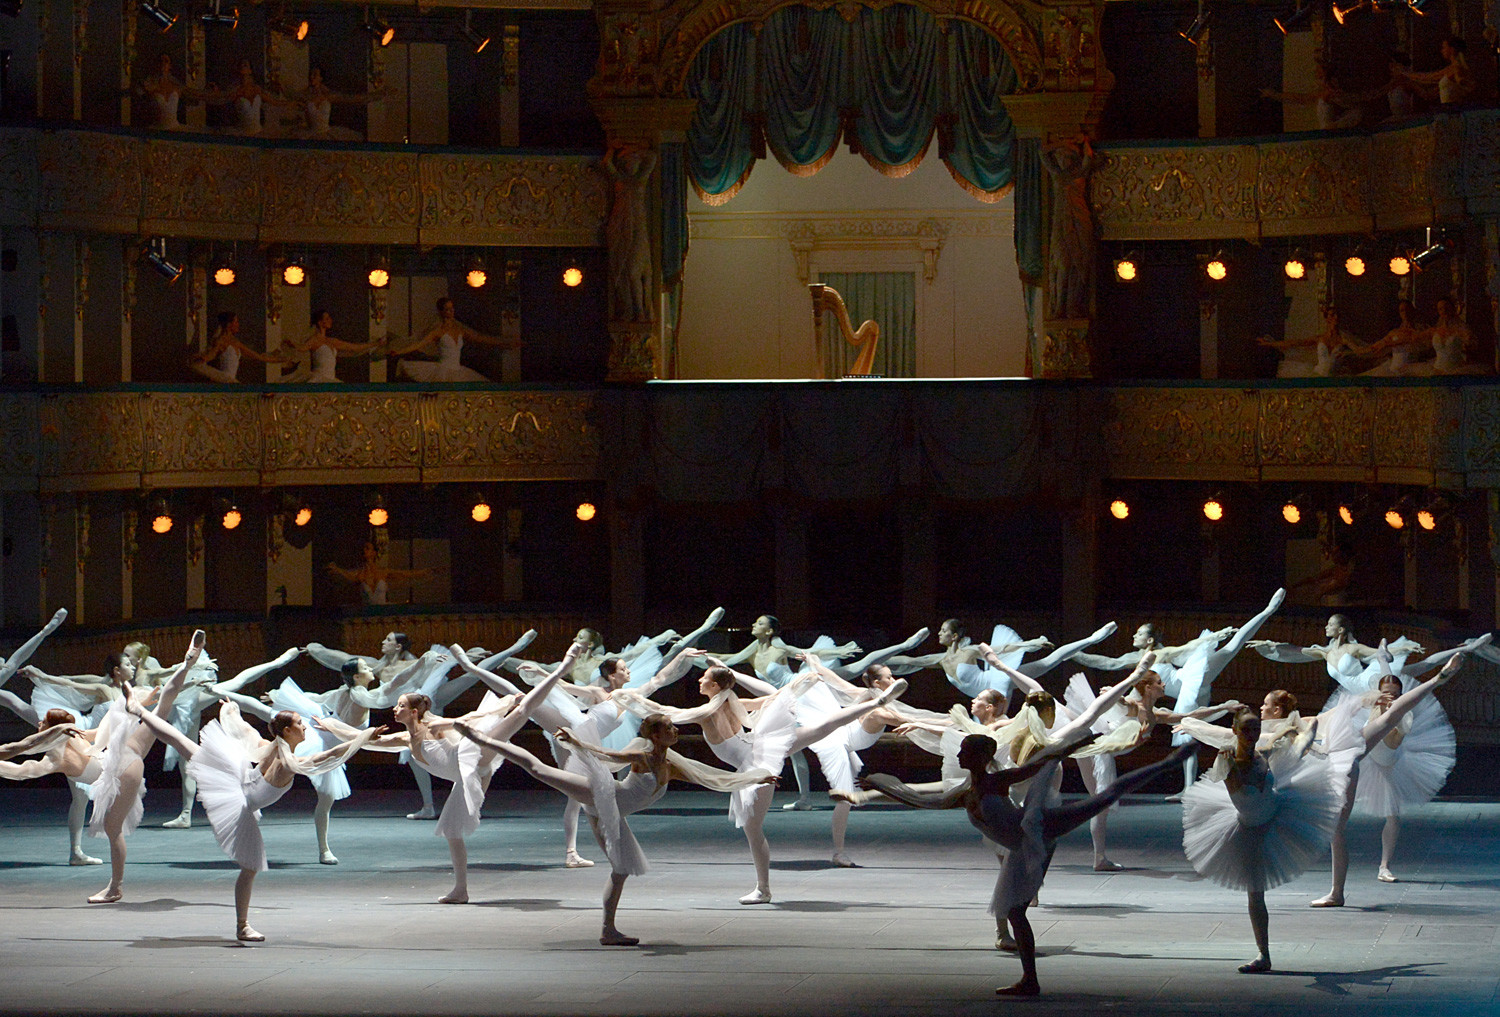  Ballet dancers of the Mariinsky Theater in the scene 